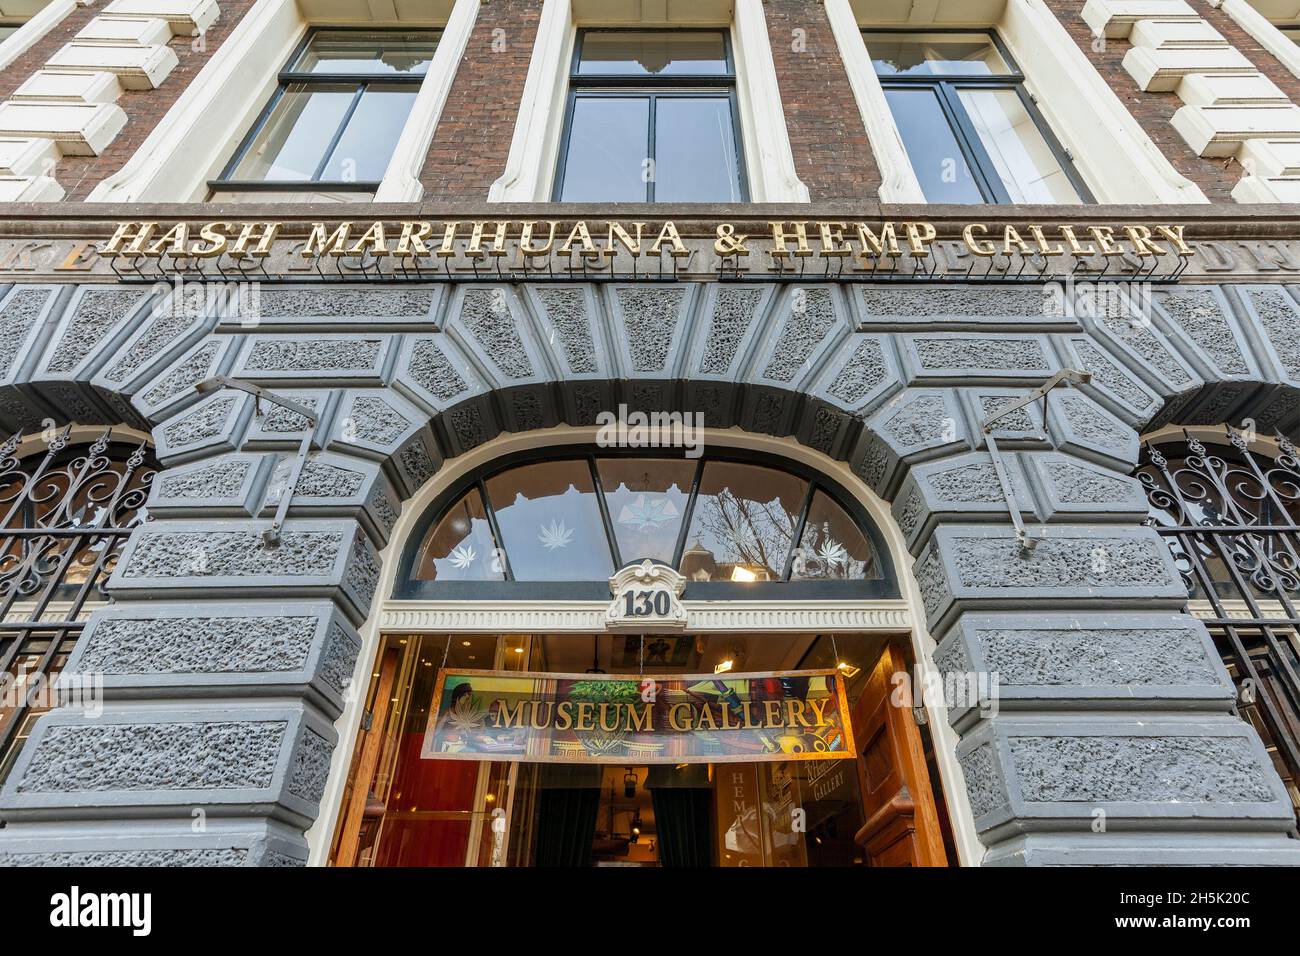 Galleria Hash Marihuana & Hemp, Oudezijds Achterburgwal, quartiere a luci verdi, Amsterdam Foto Stock